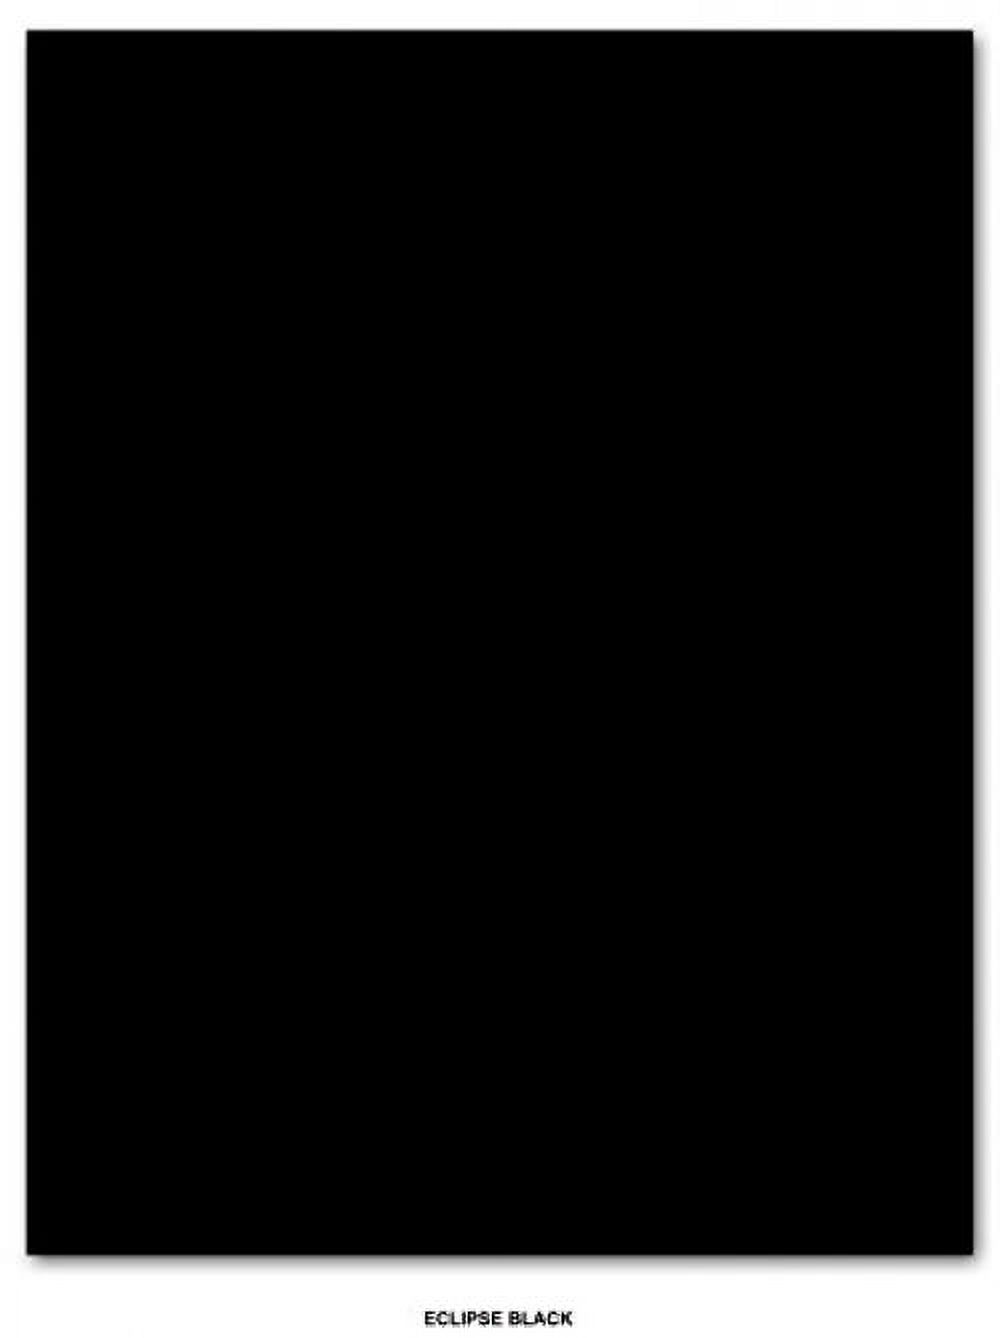 Mohawk BriteHue Bright Color Paper | Black | 24lb Bond / 60lb Text Paper |  8.5" x 11" (Letter Size) | 100 Sheets Per Pack - image 2 of 2